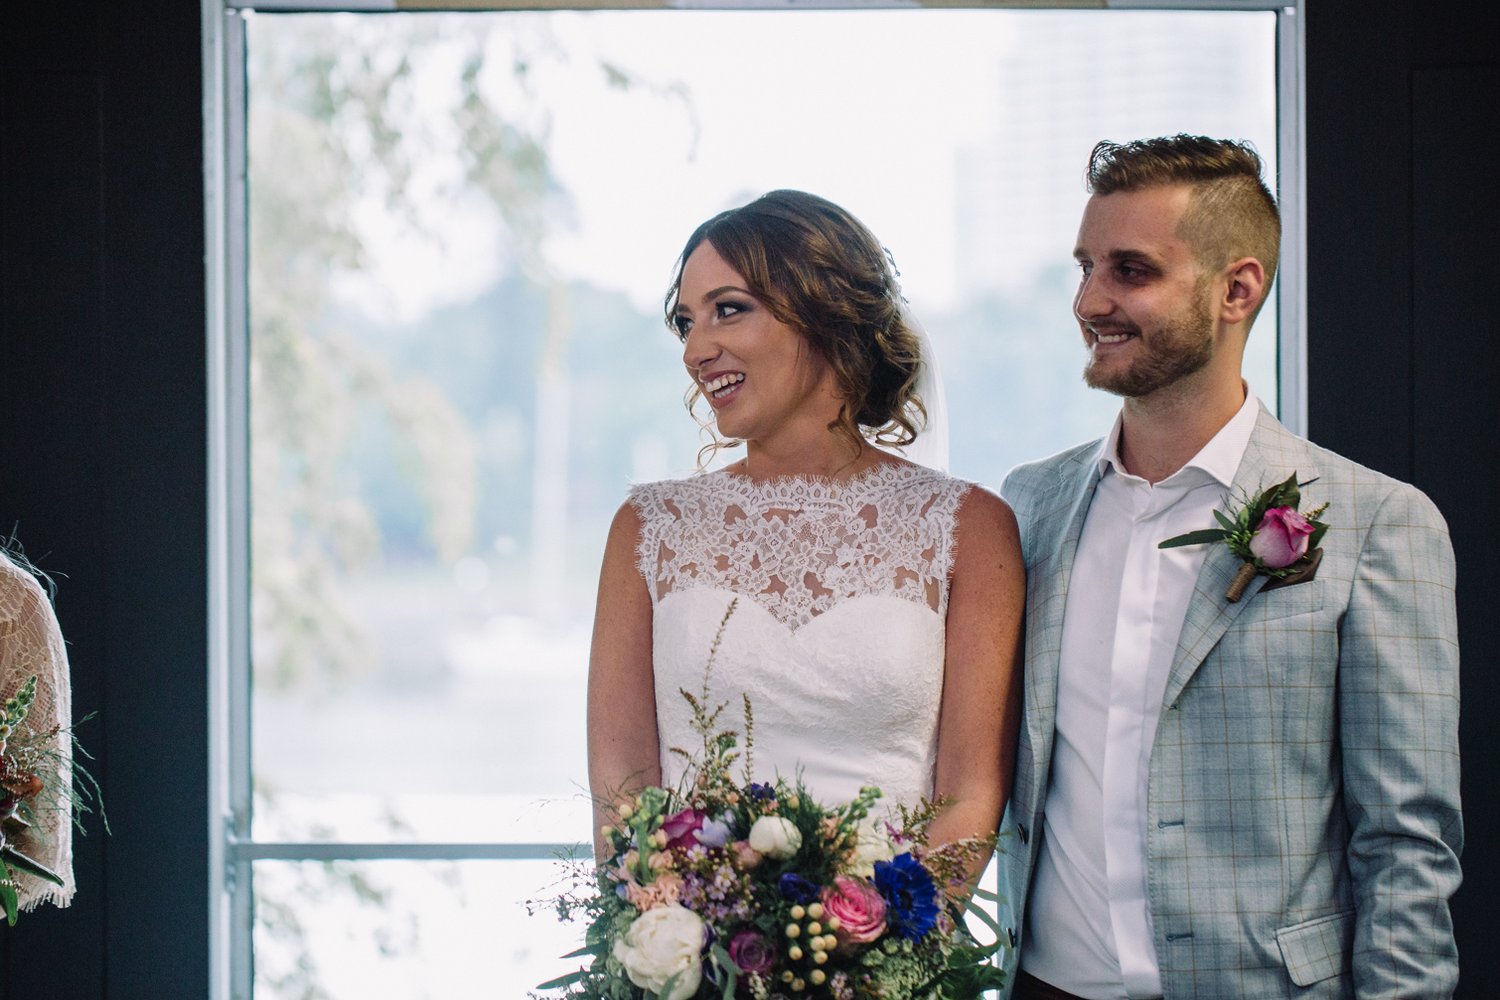 Capturing Love: Brisbane's Premier Wedding Videographer